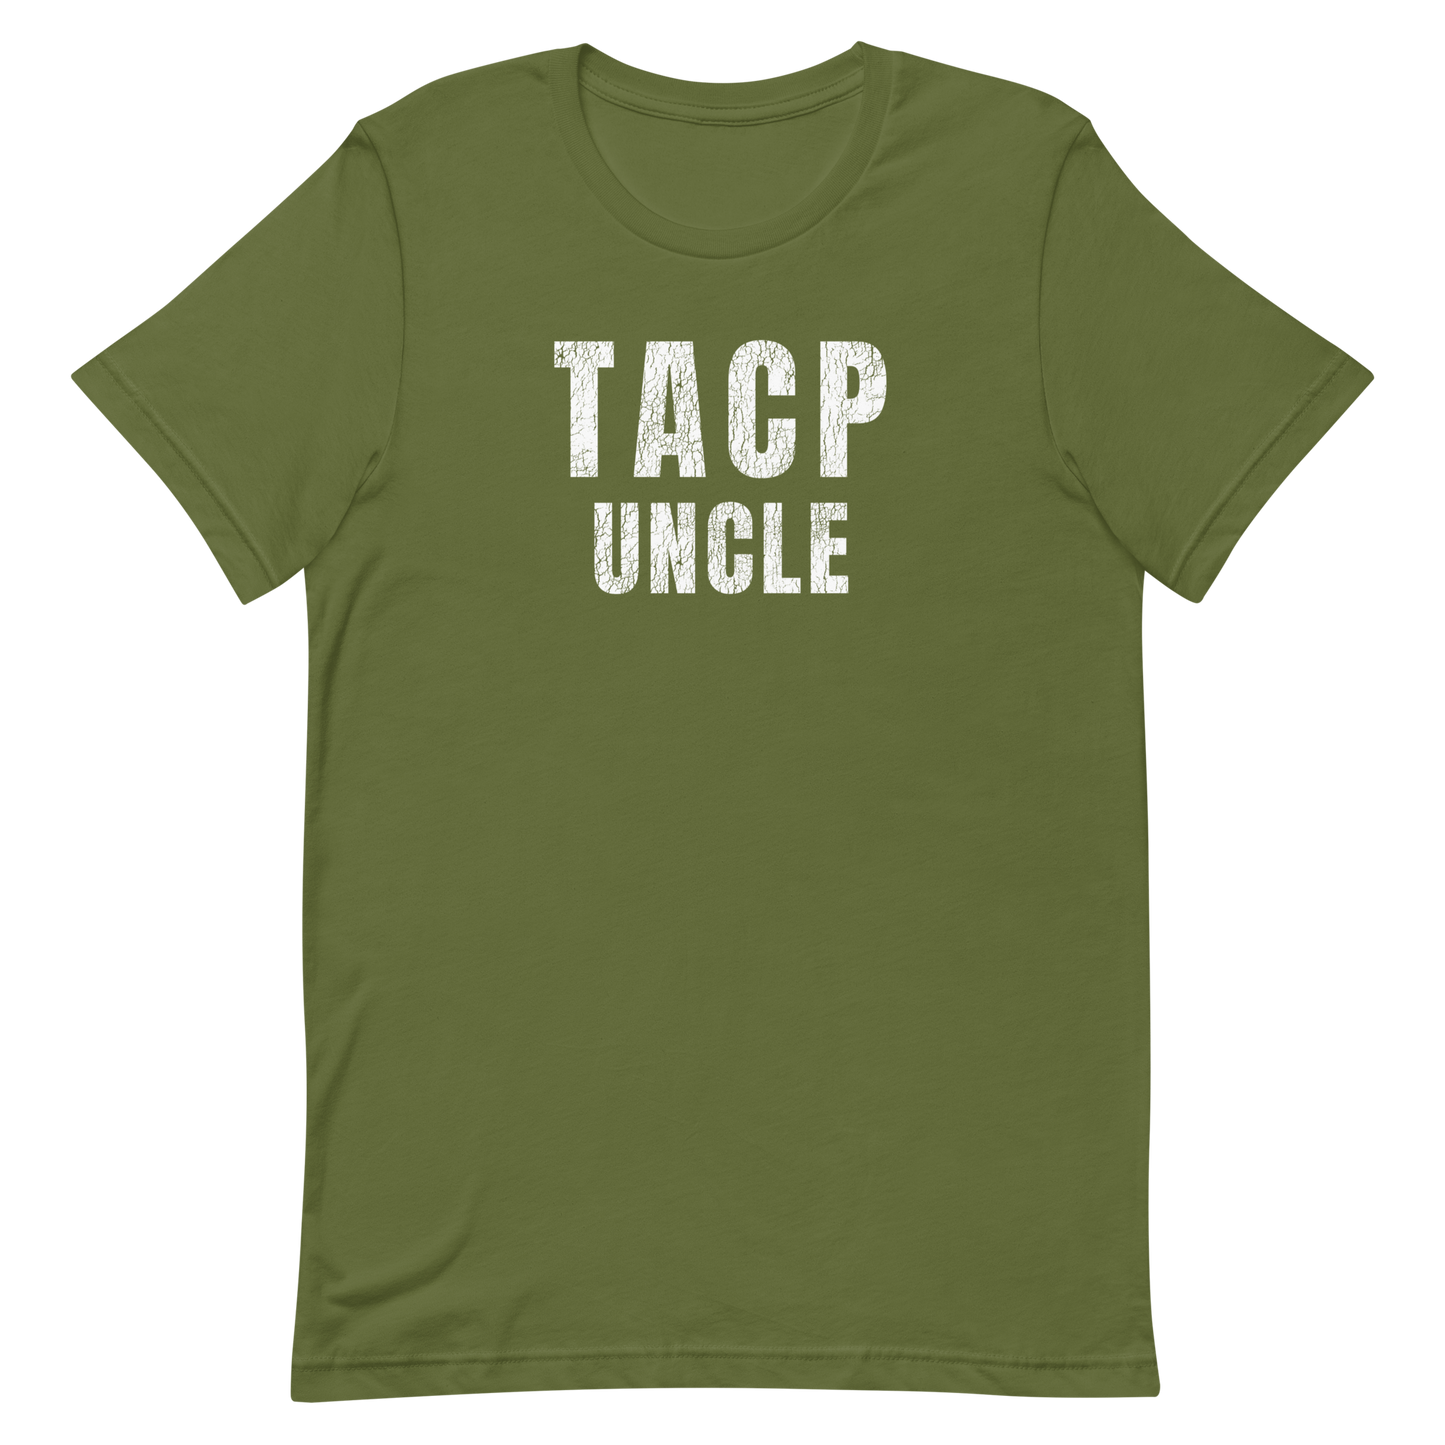 TACP Uncle Tee